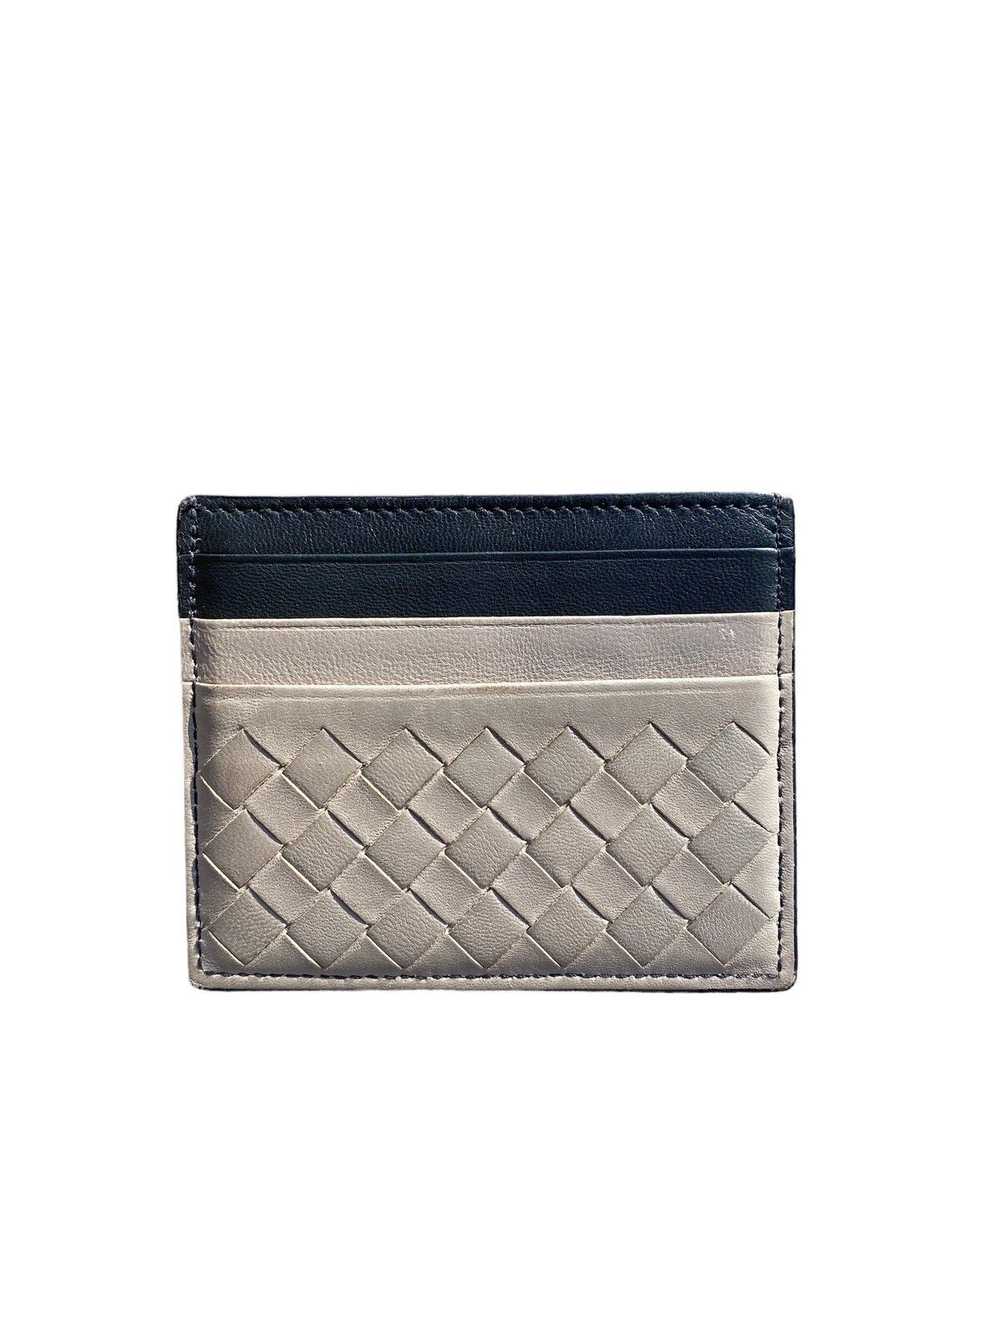 Bottega Veneta Card Holder Wallet - image 3